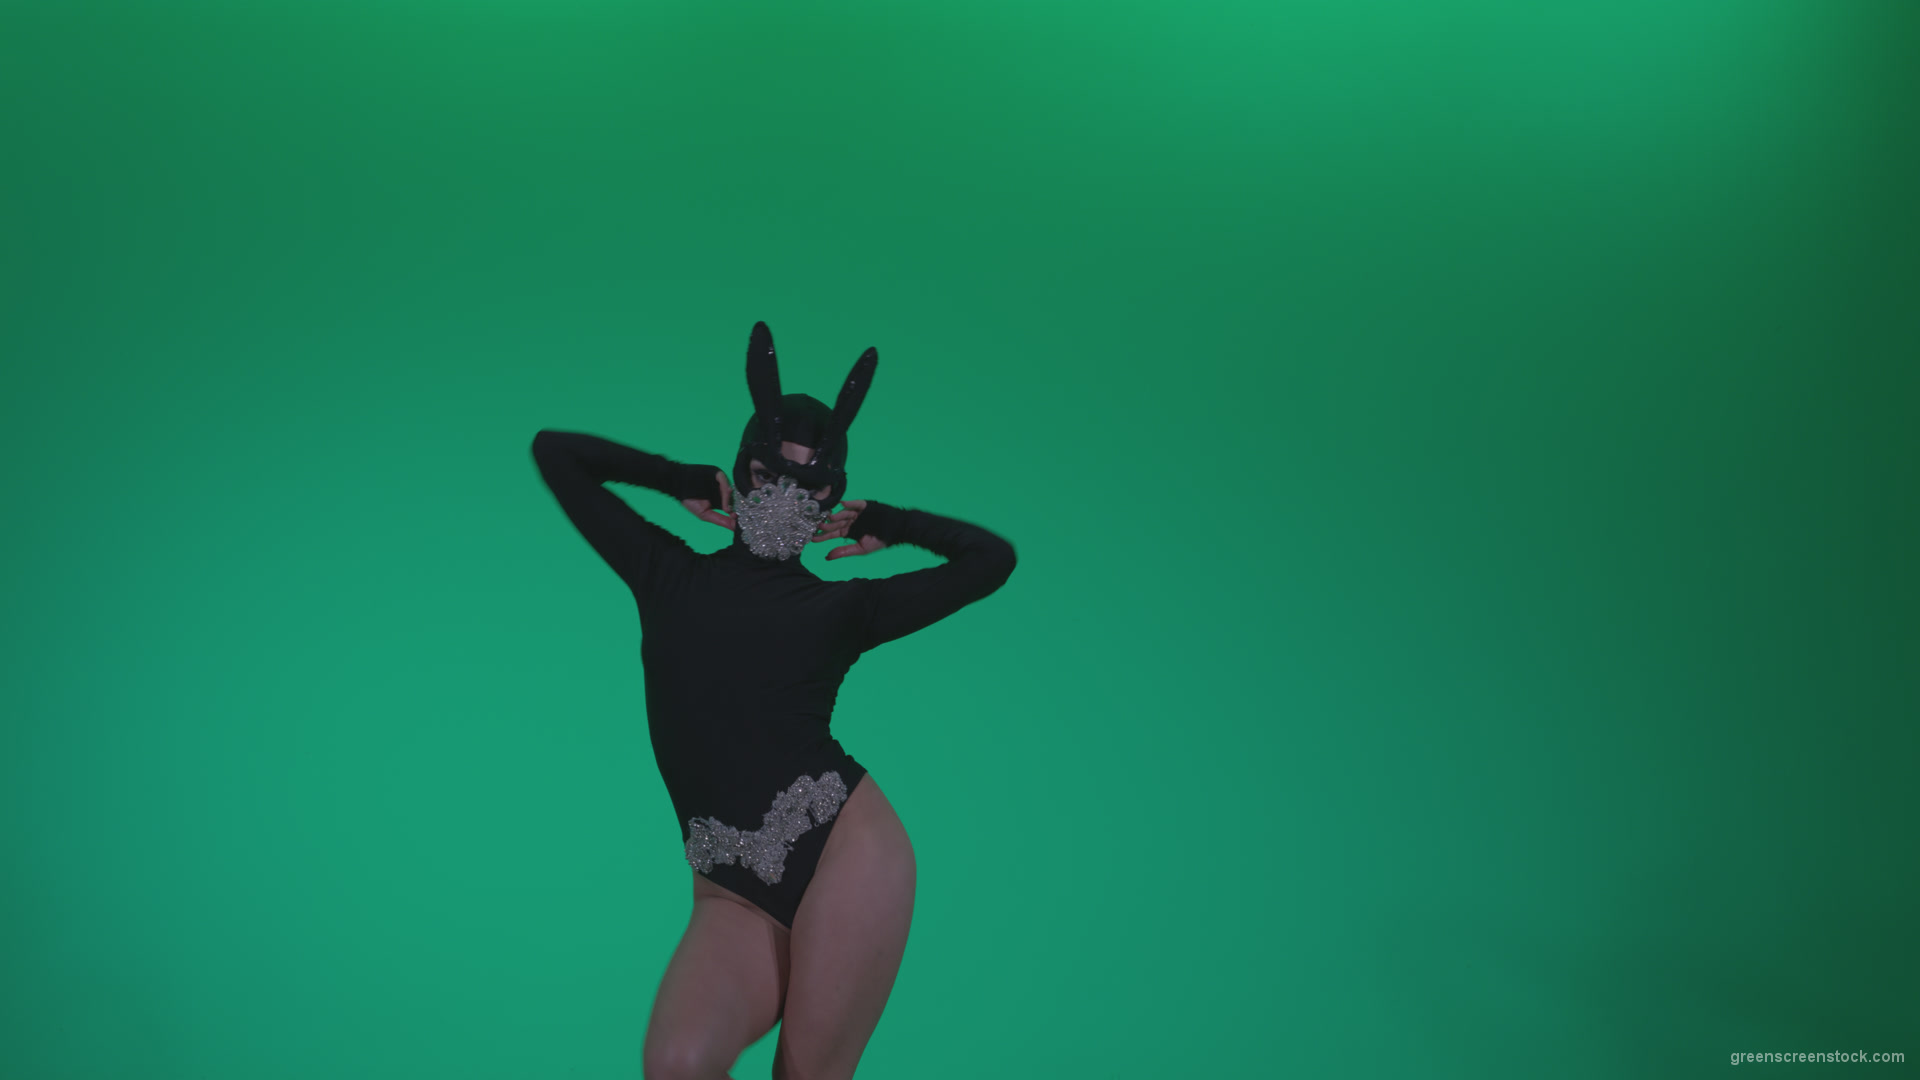 Go-go-Dancer-Black-Rabbit-u14-Green-Screen-Video-Footage_004 Green Screen Stock